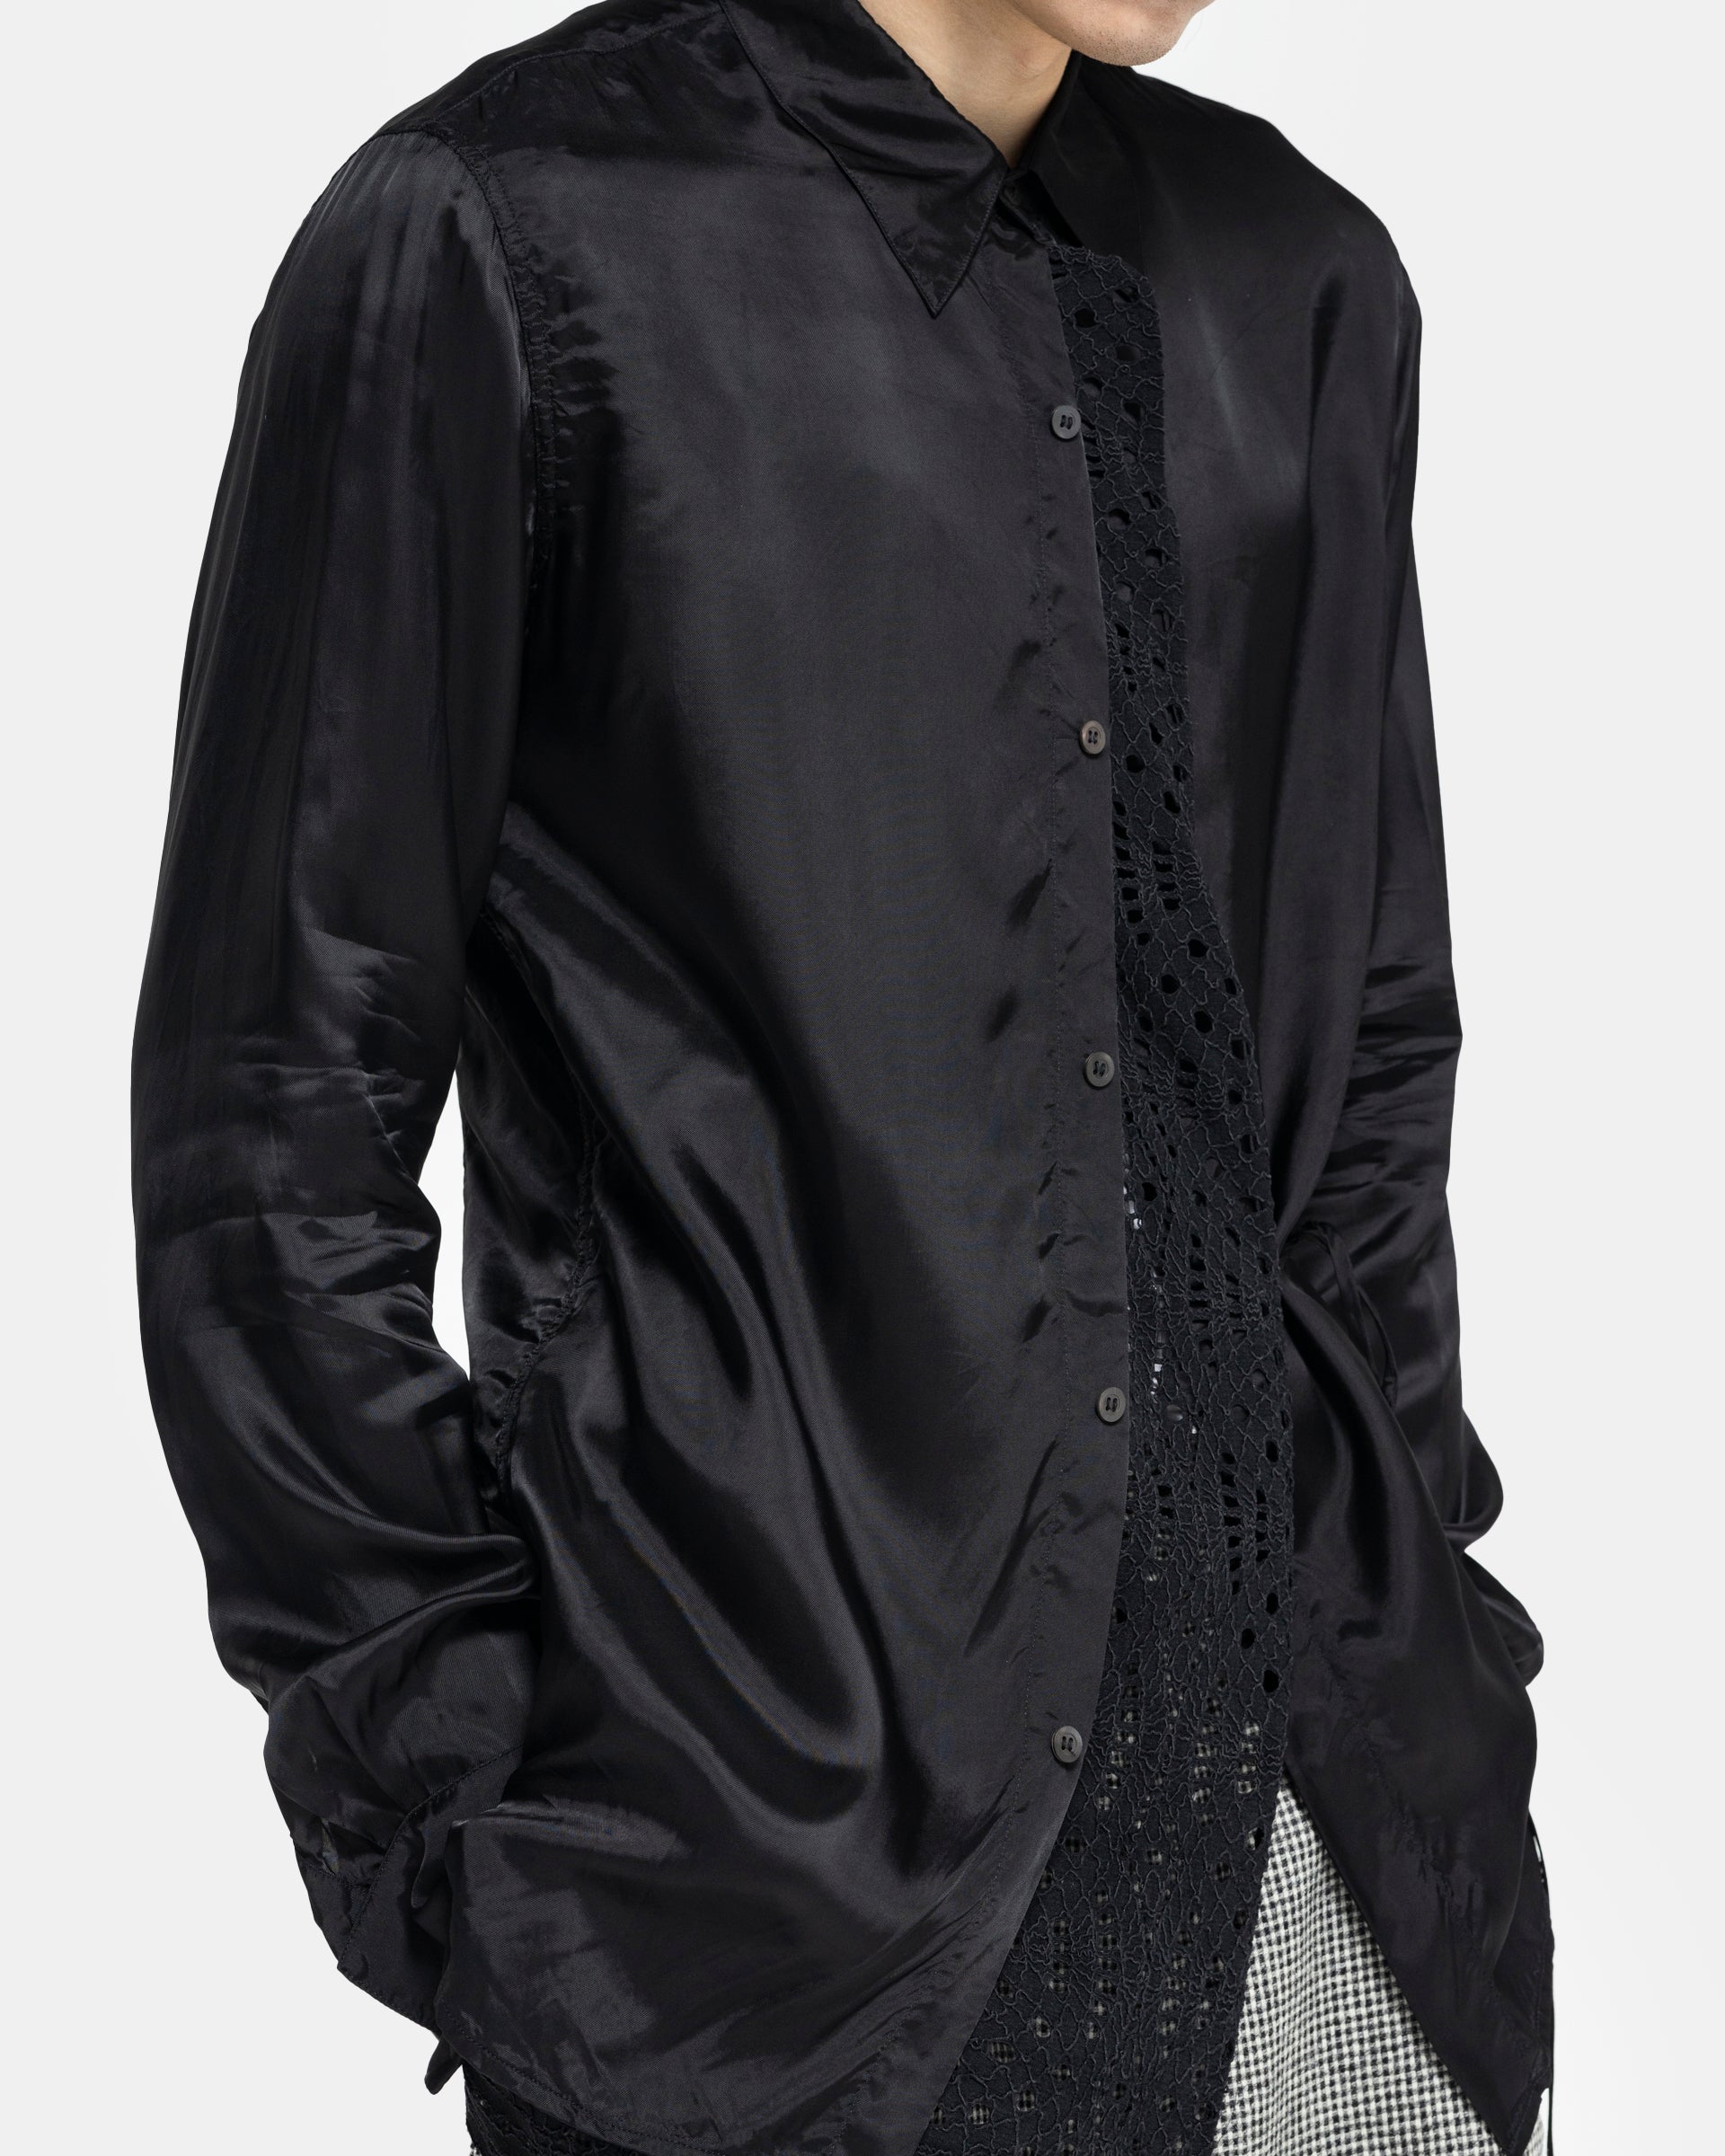 Carvie Tris Tux Shirt in Black